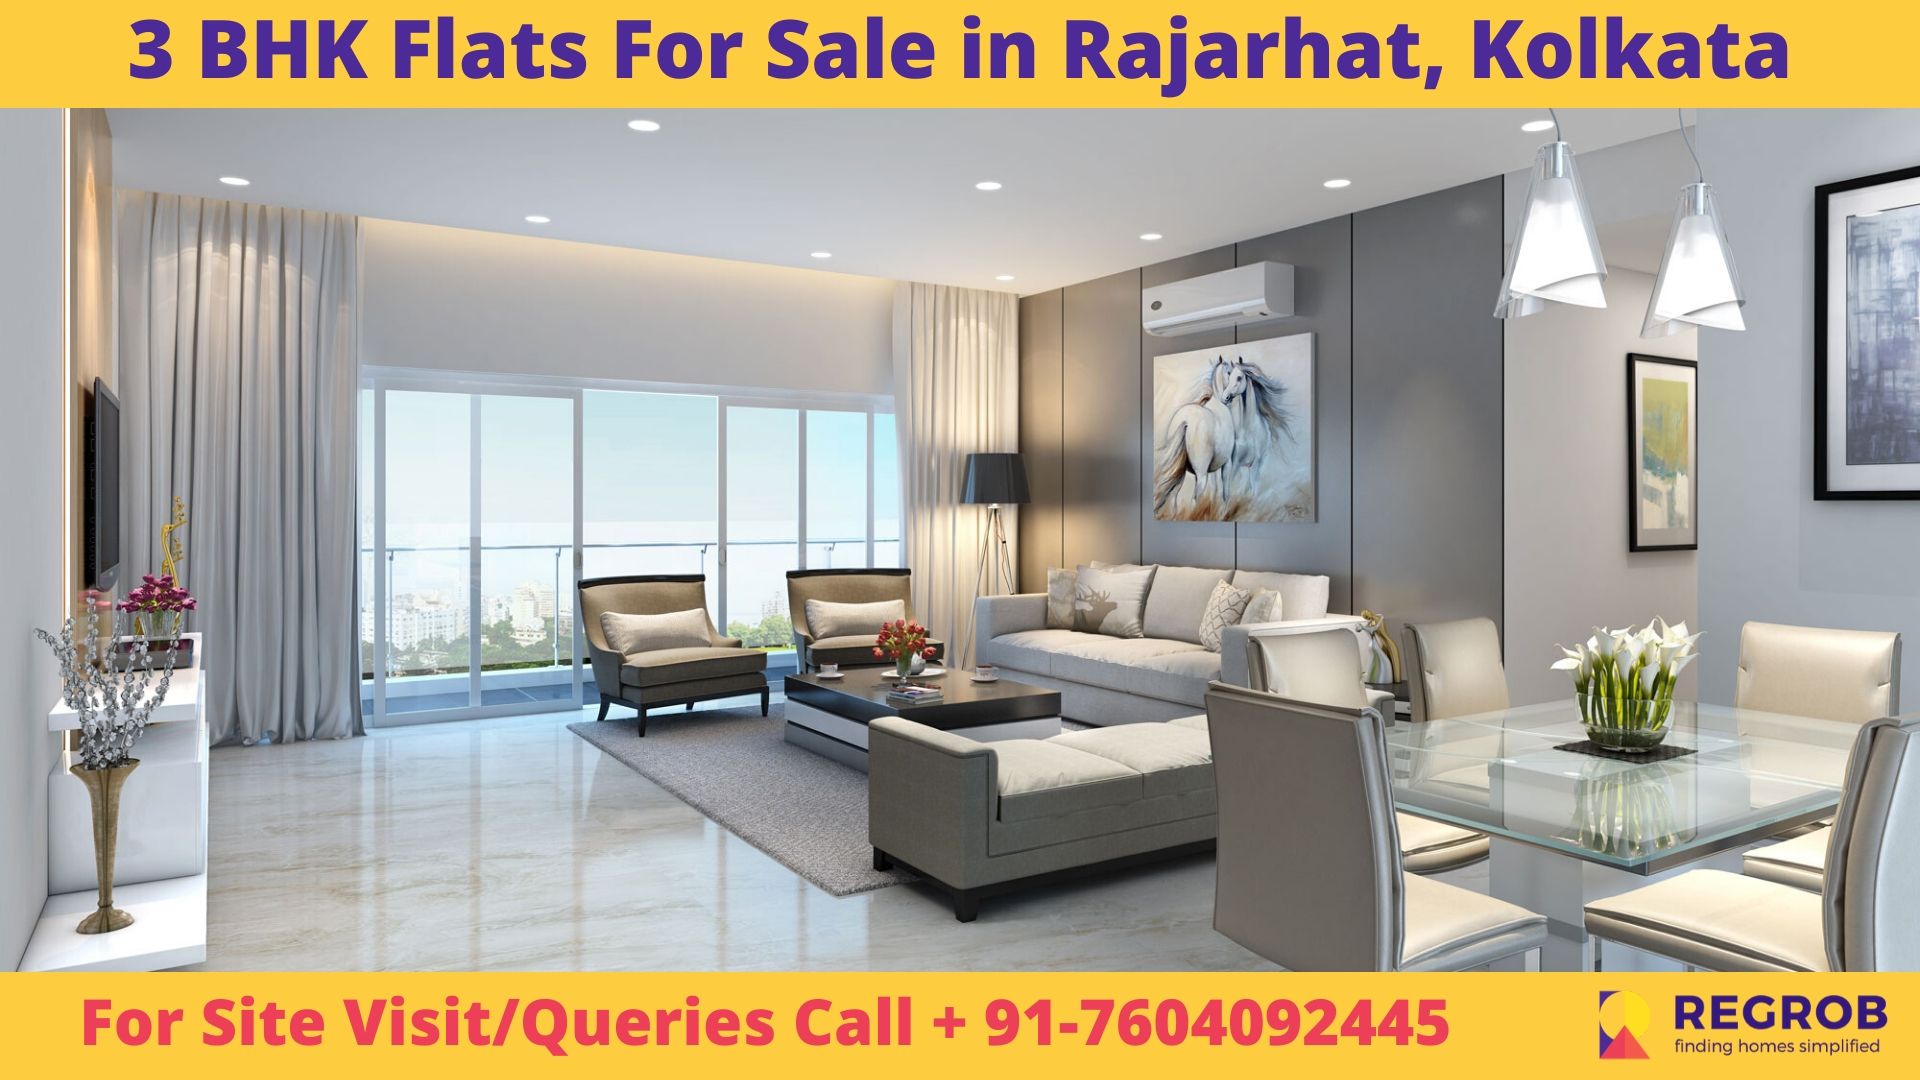 3 BHK Flats For Sale in Rajarhat, Kolkata